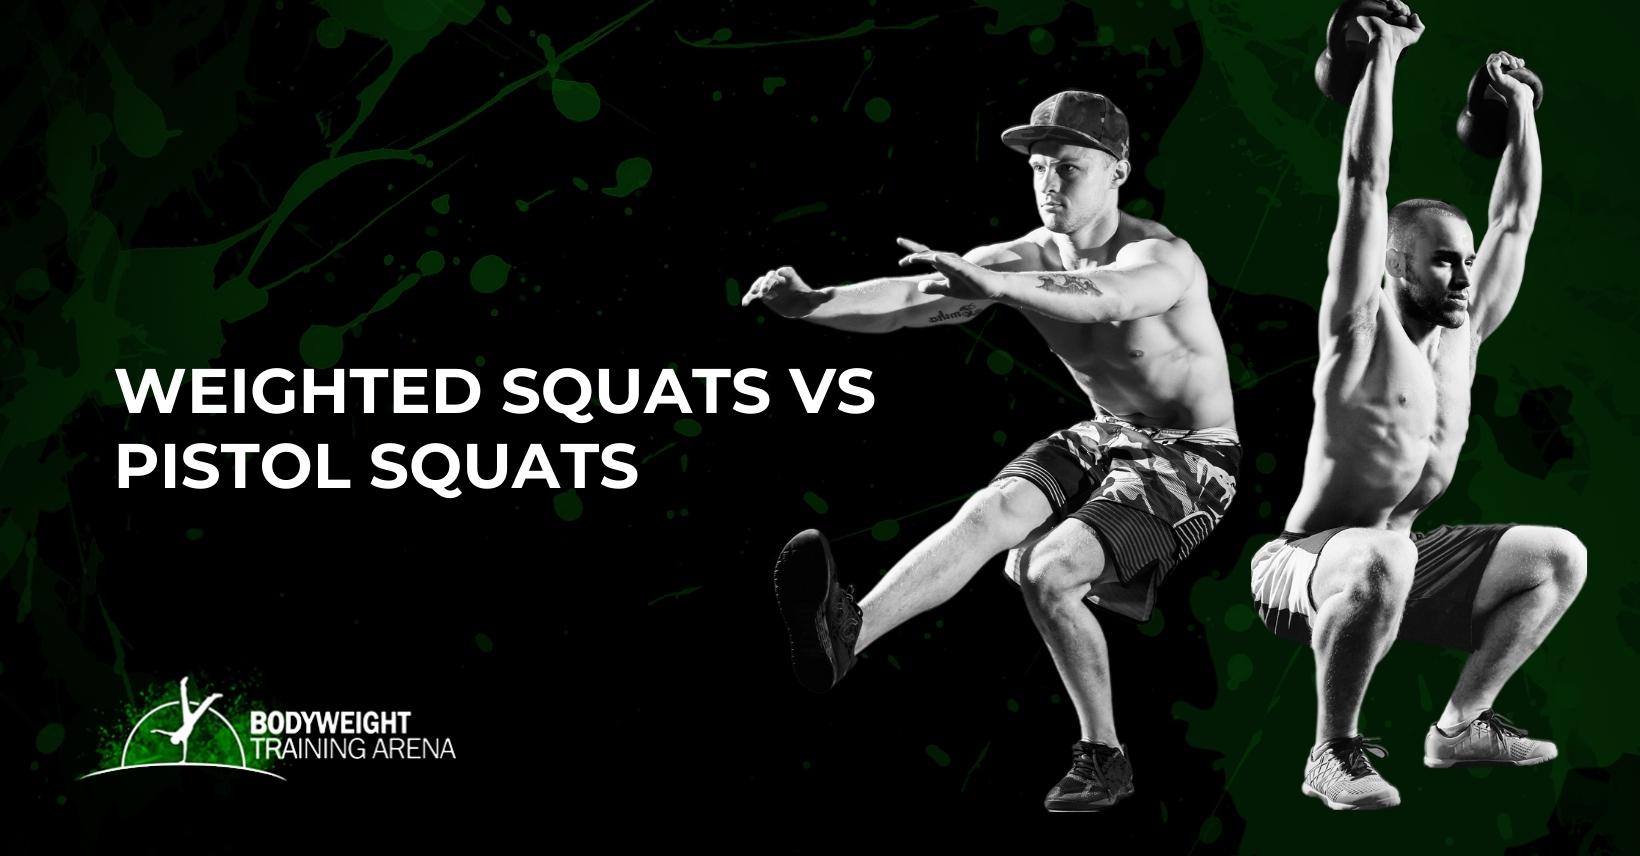 Weighted squats vs Pistol squats